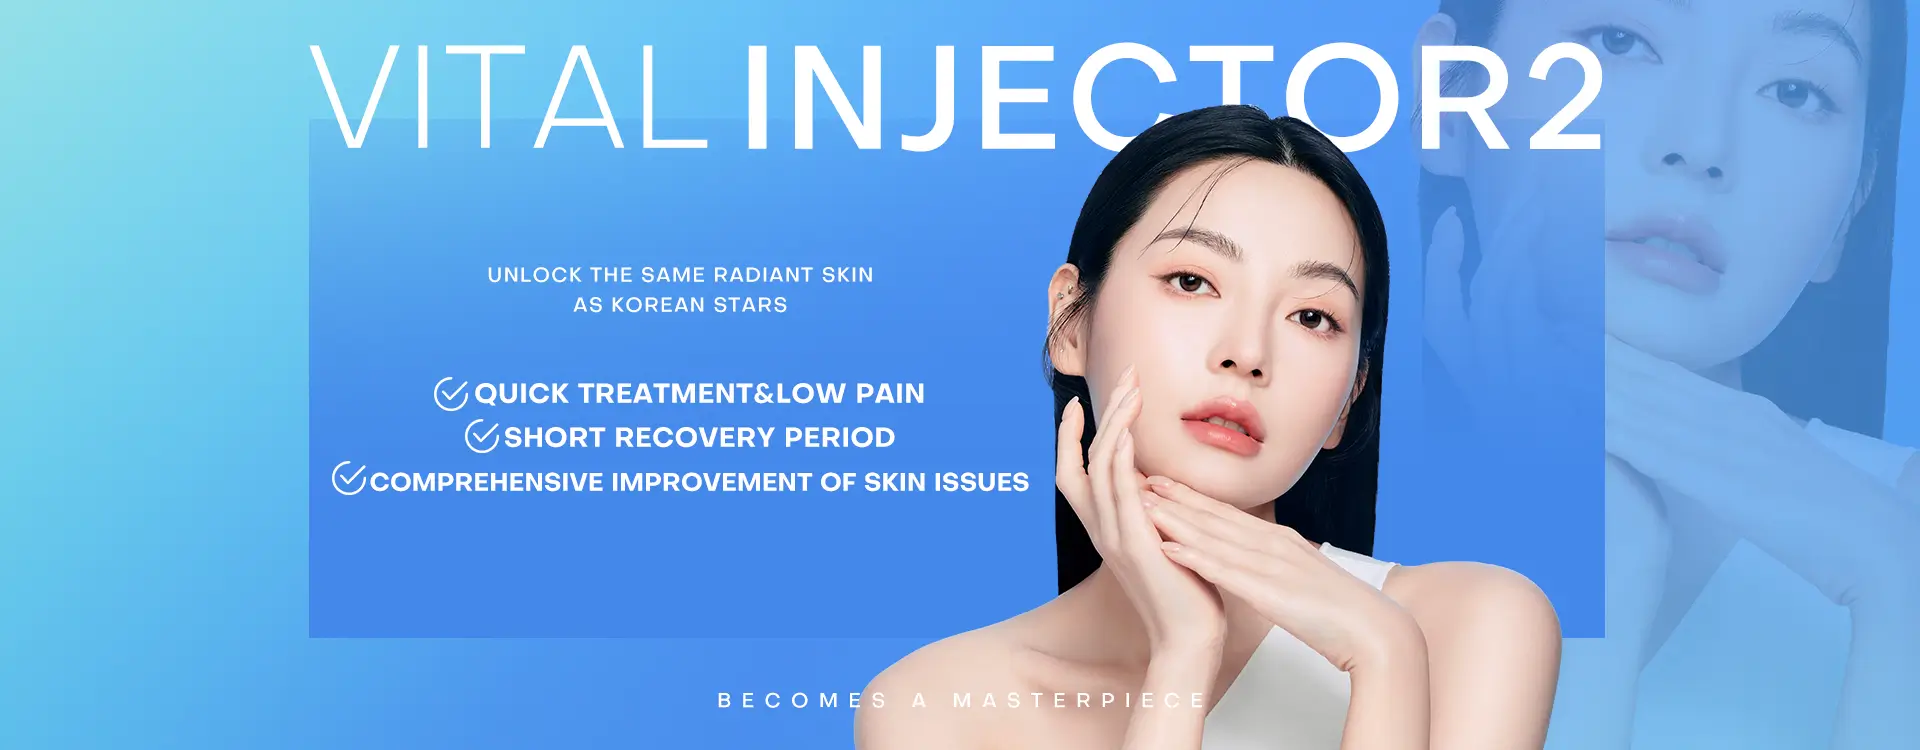 Vital Injector 2: The Key to Dewy, Korean Star-like Skin